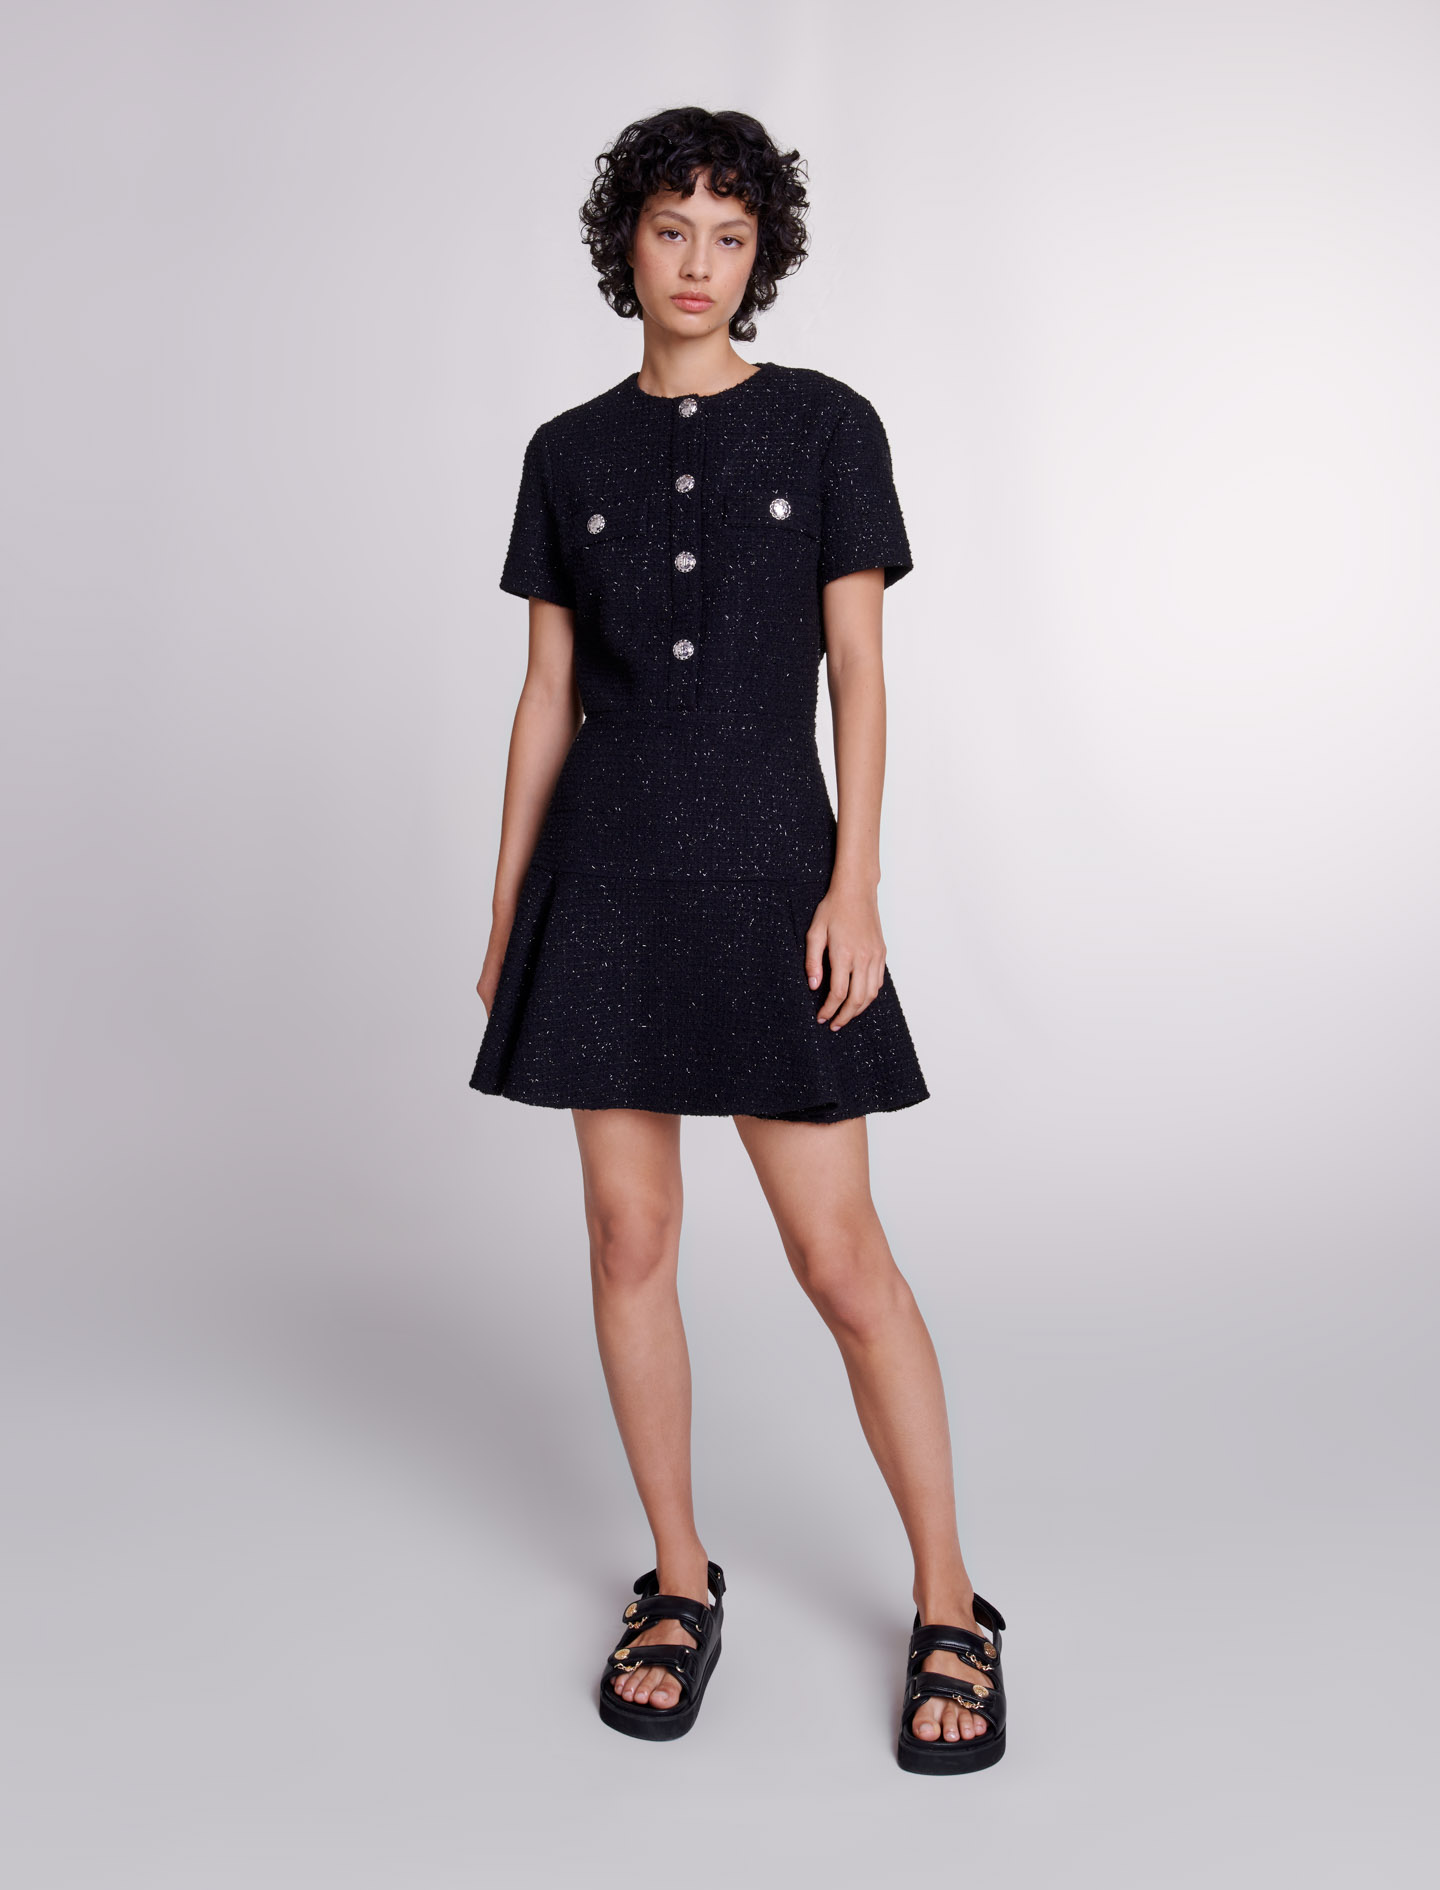 Maje Woman's cotton, Short tweed dress for Spring/Summer, in color Black / Black